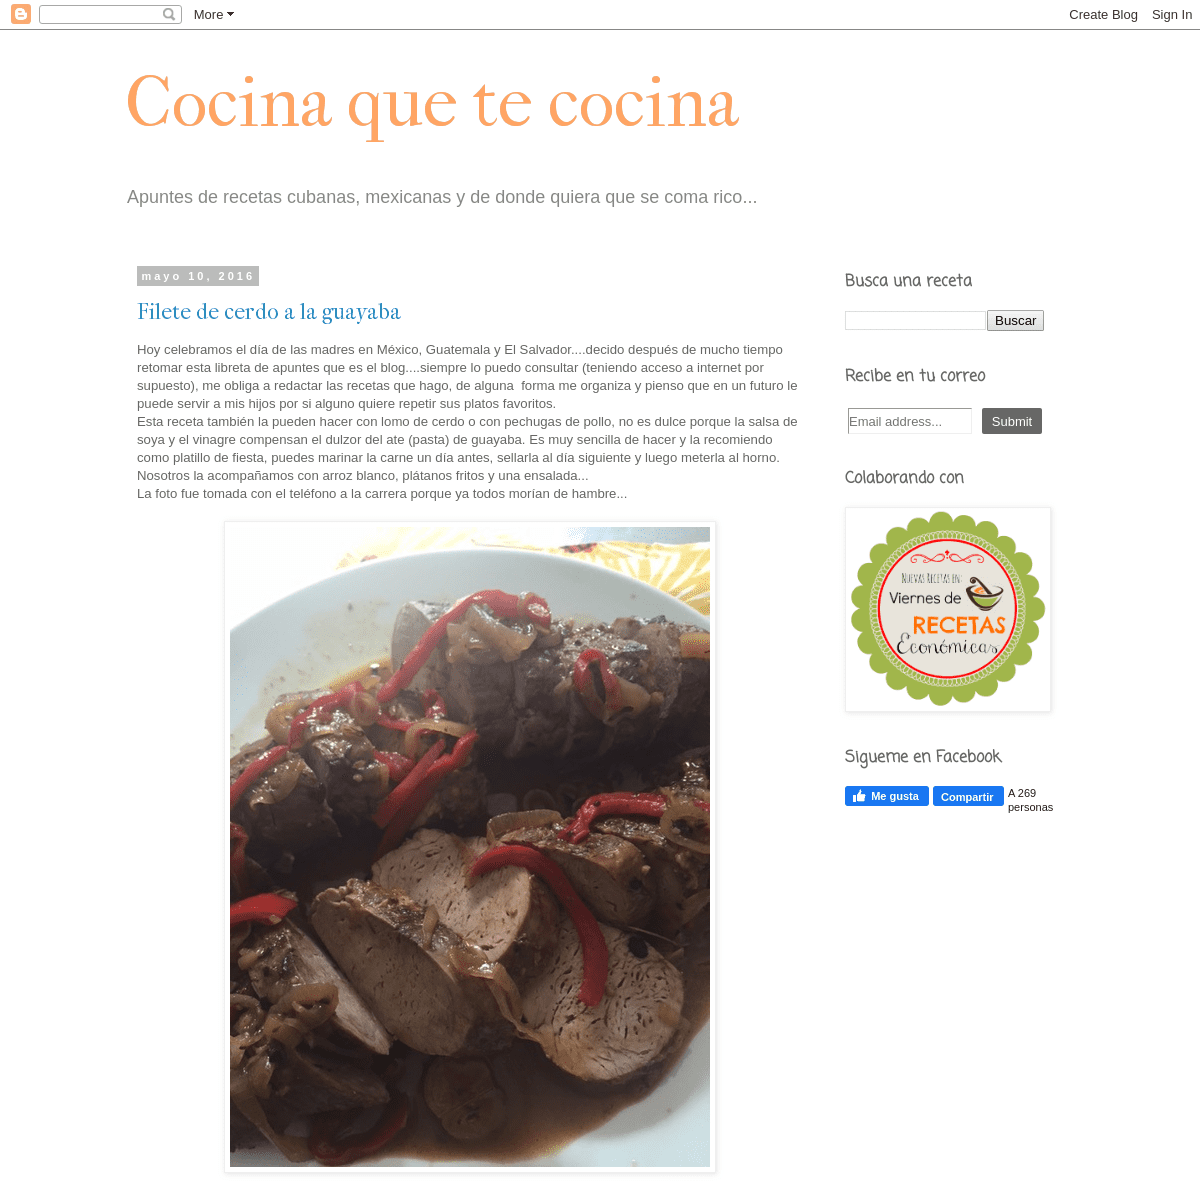 A complete backup of cocina-quetecocina.blogspot.com